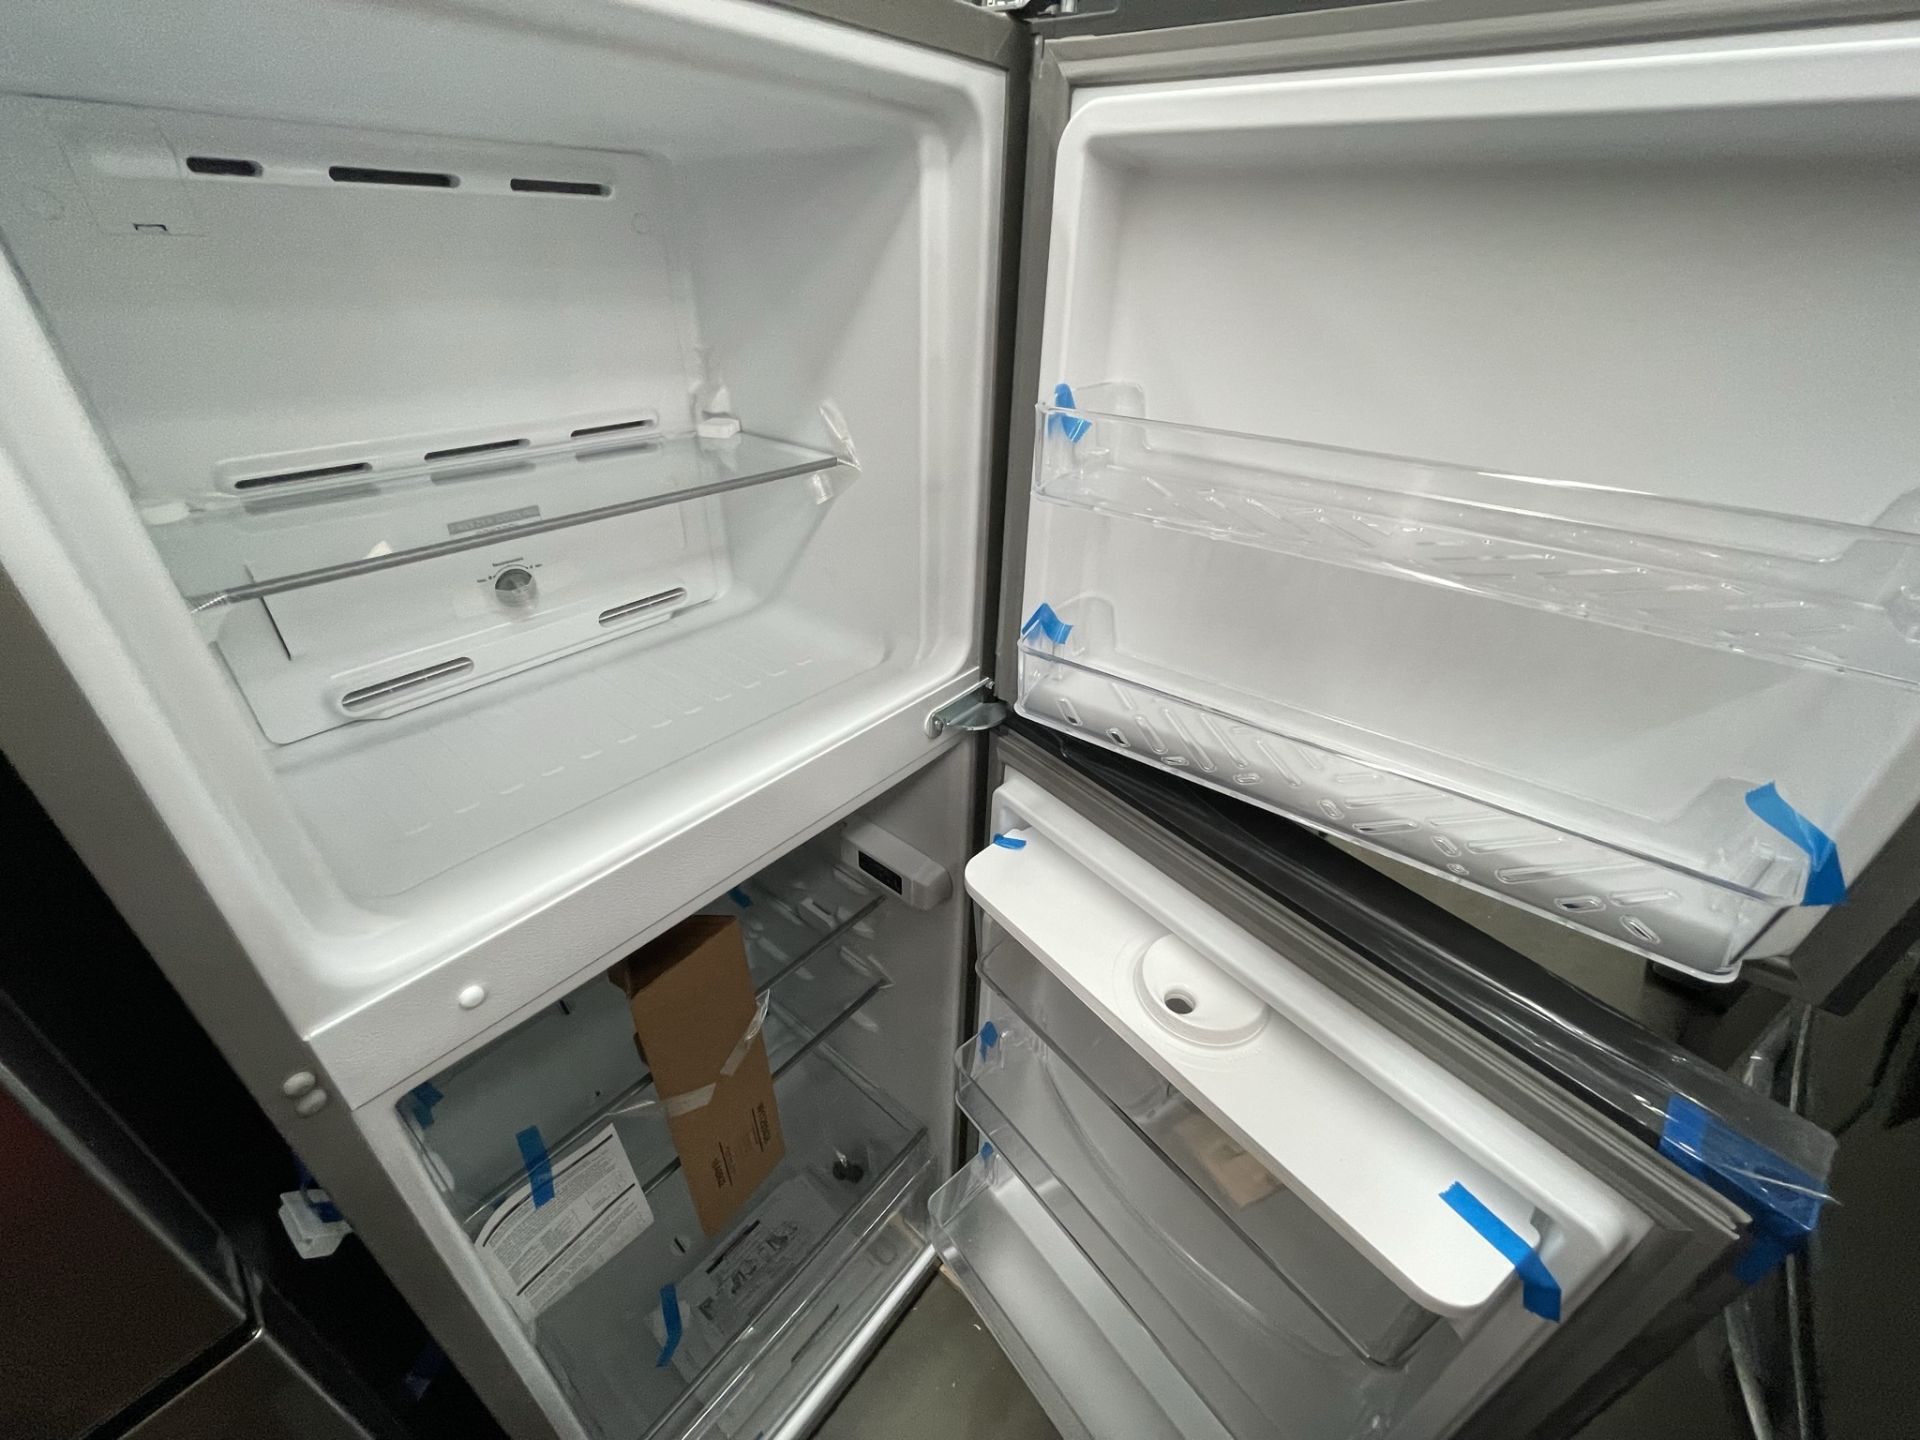 (EQUIPO NUEVO) 1 Refrigerador Con Dispensador De Agua Marca Whirlpool, Modelo WT1133M, Serie 85956, - Image 7 of 8